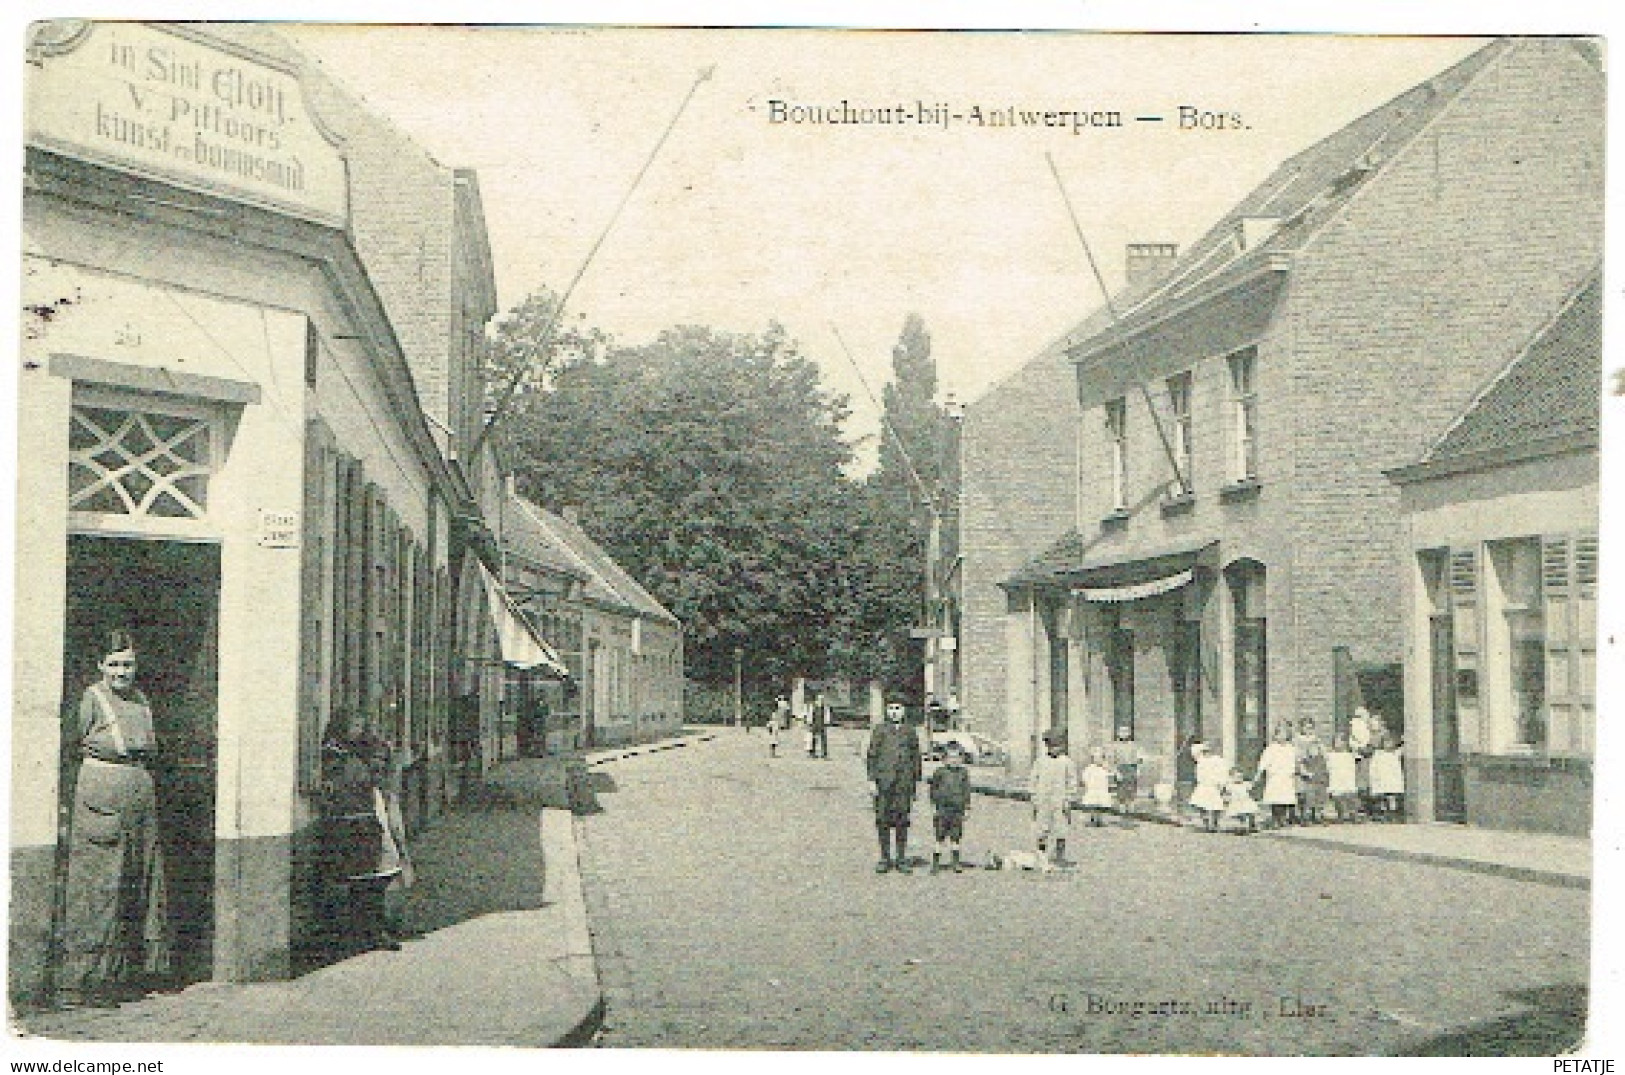 Bouchout-bij-Antwerpen , Bors - Boechout